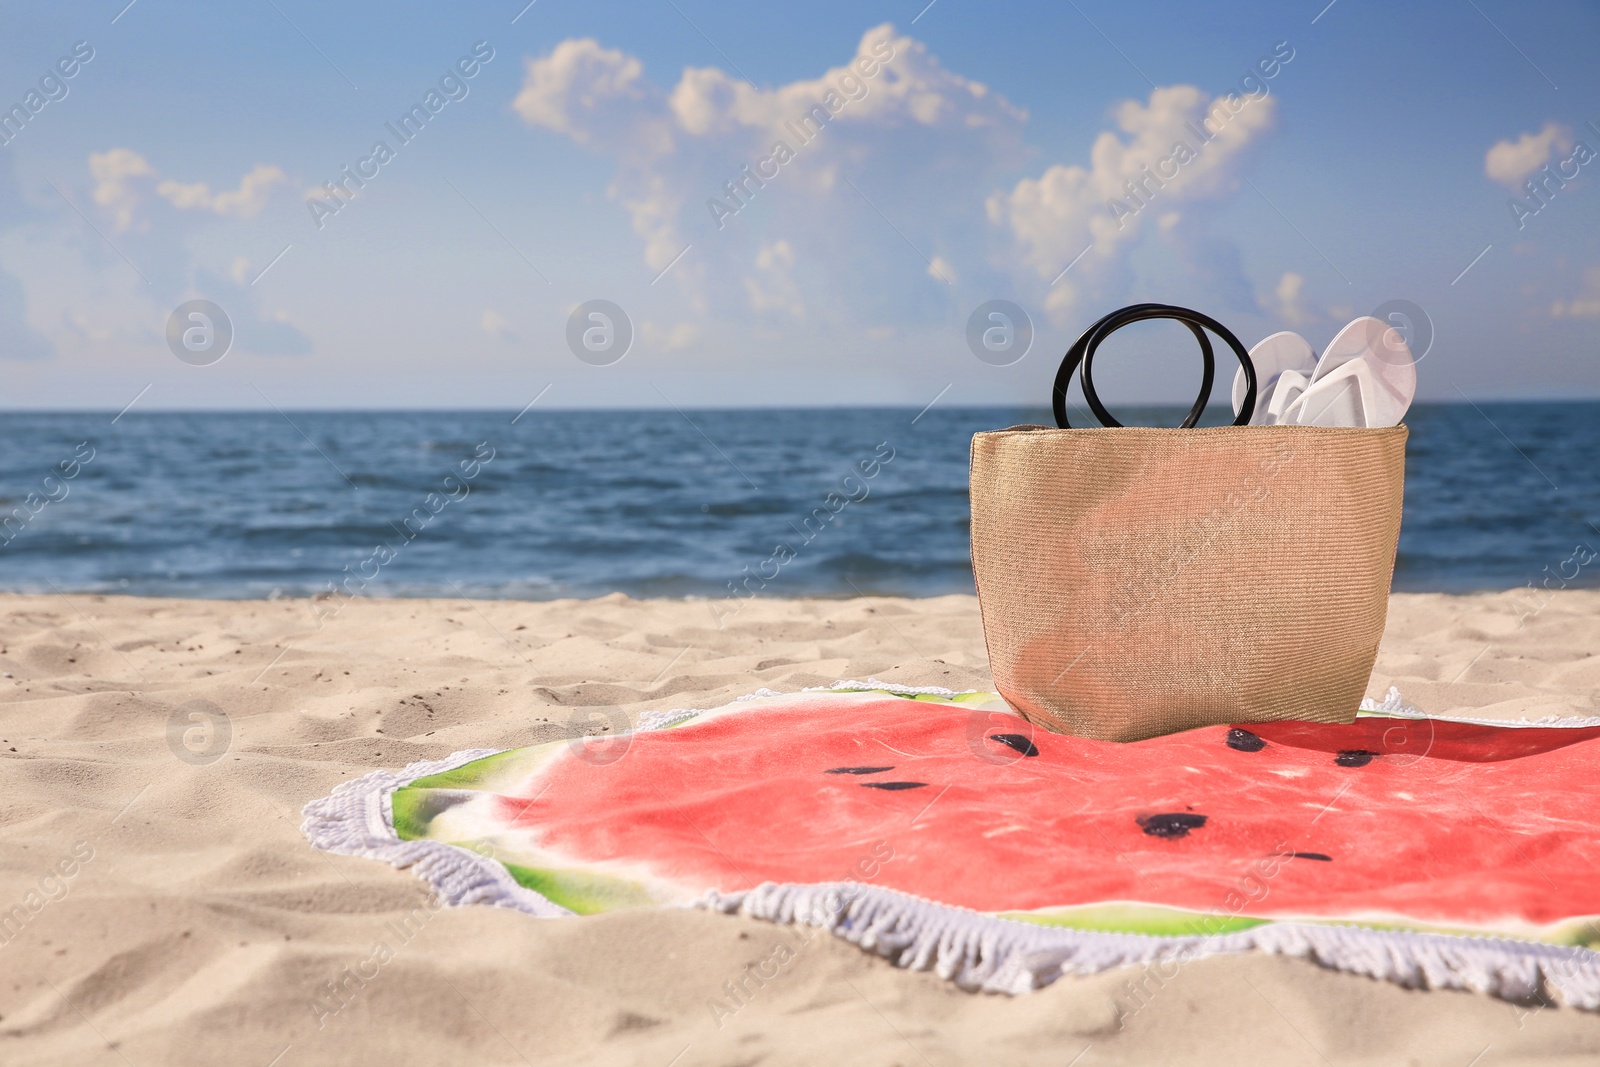 Photo of Beautiful watermelon beach towel with tassels, bag and flip flops on sandy seashore